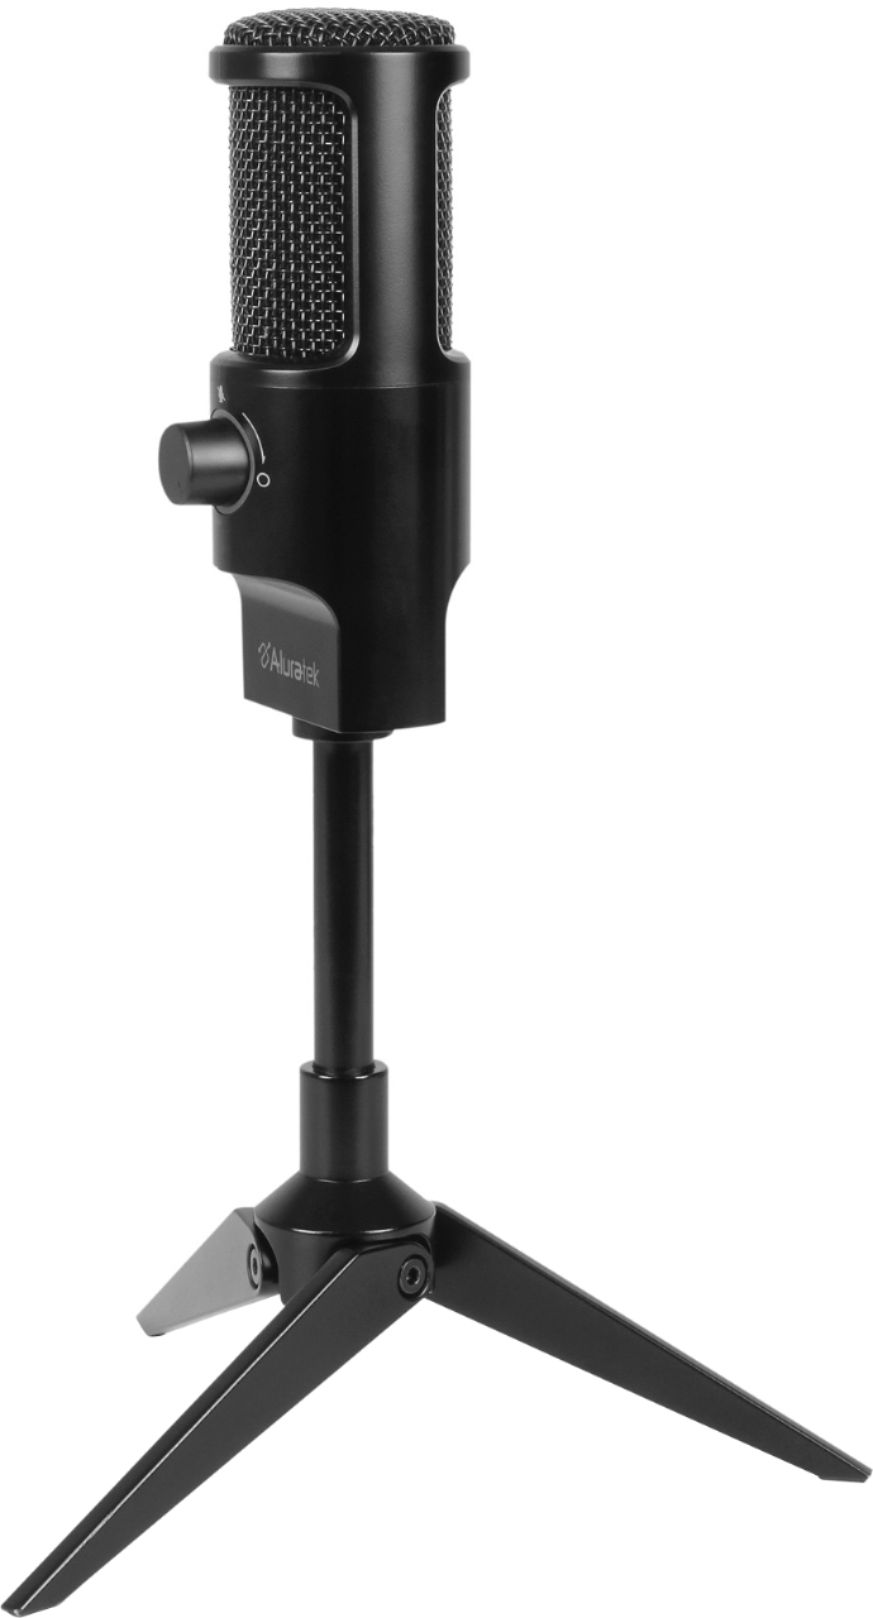 Angle View: Aluratek - Premium Rocket USB Microphone